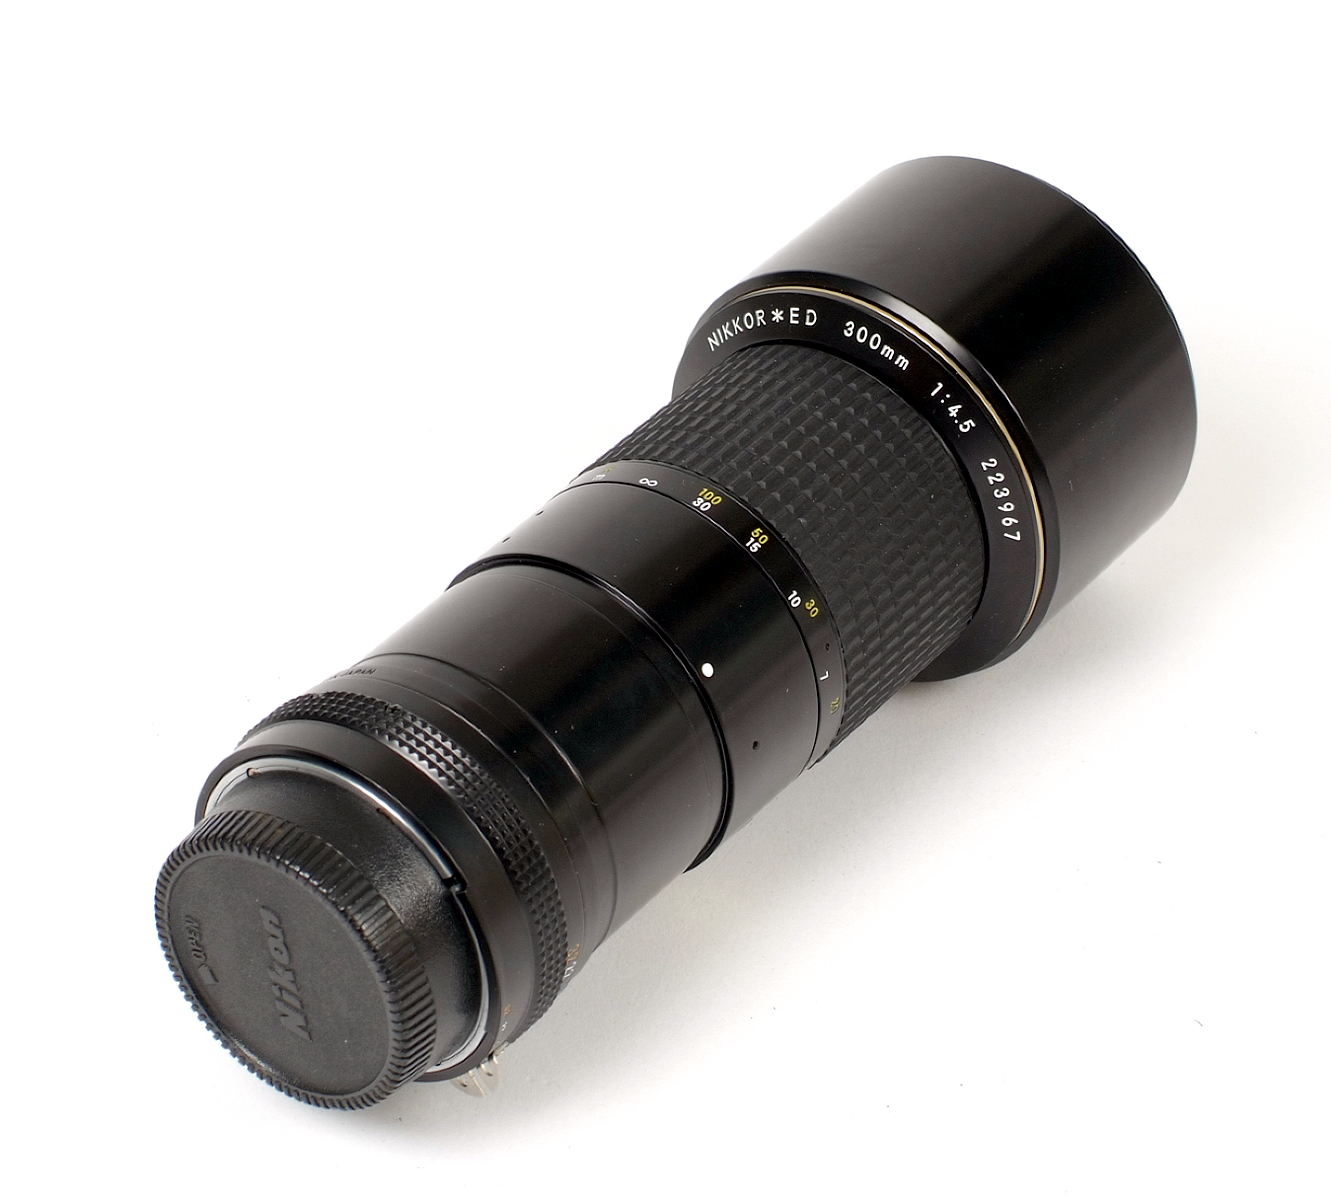 Nikkor 300mm f4.5 Ai-s ED IF Manual Focus Lens. - Image 2 of 2